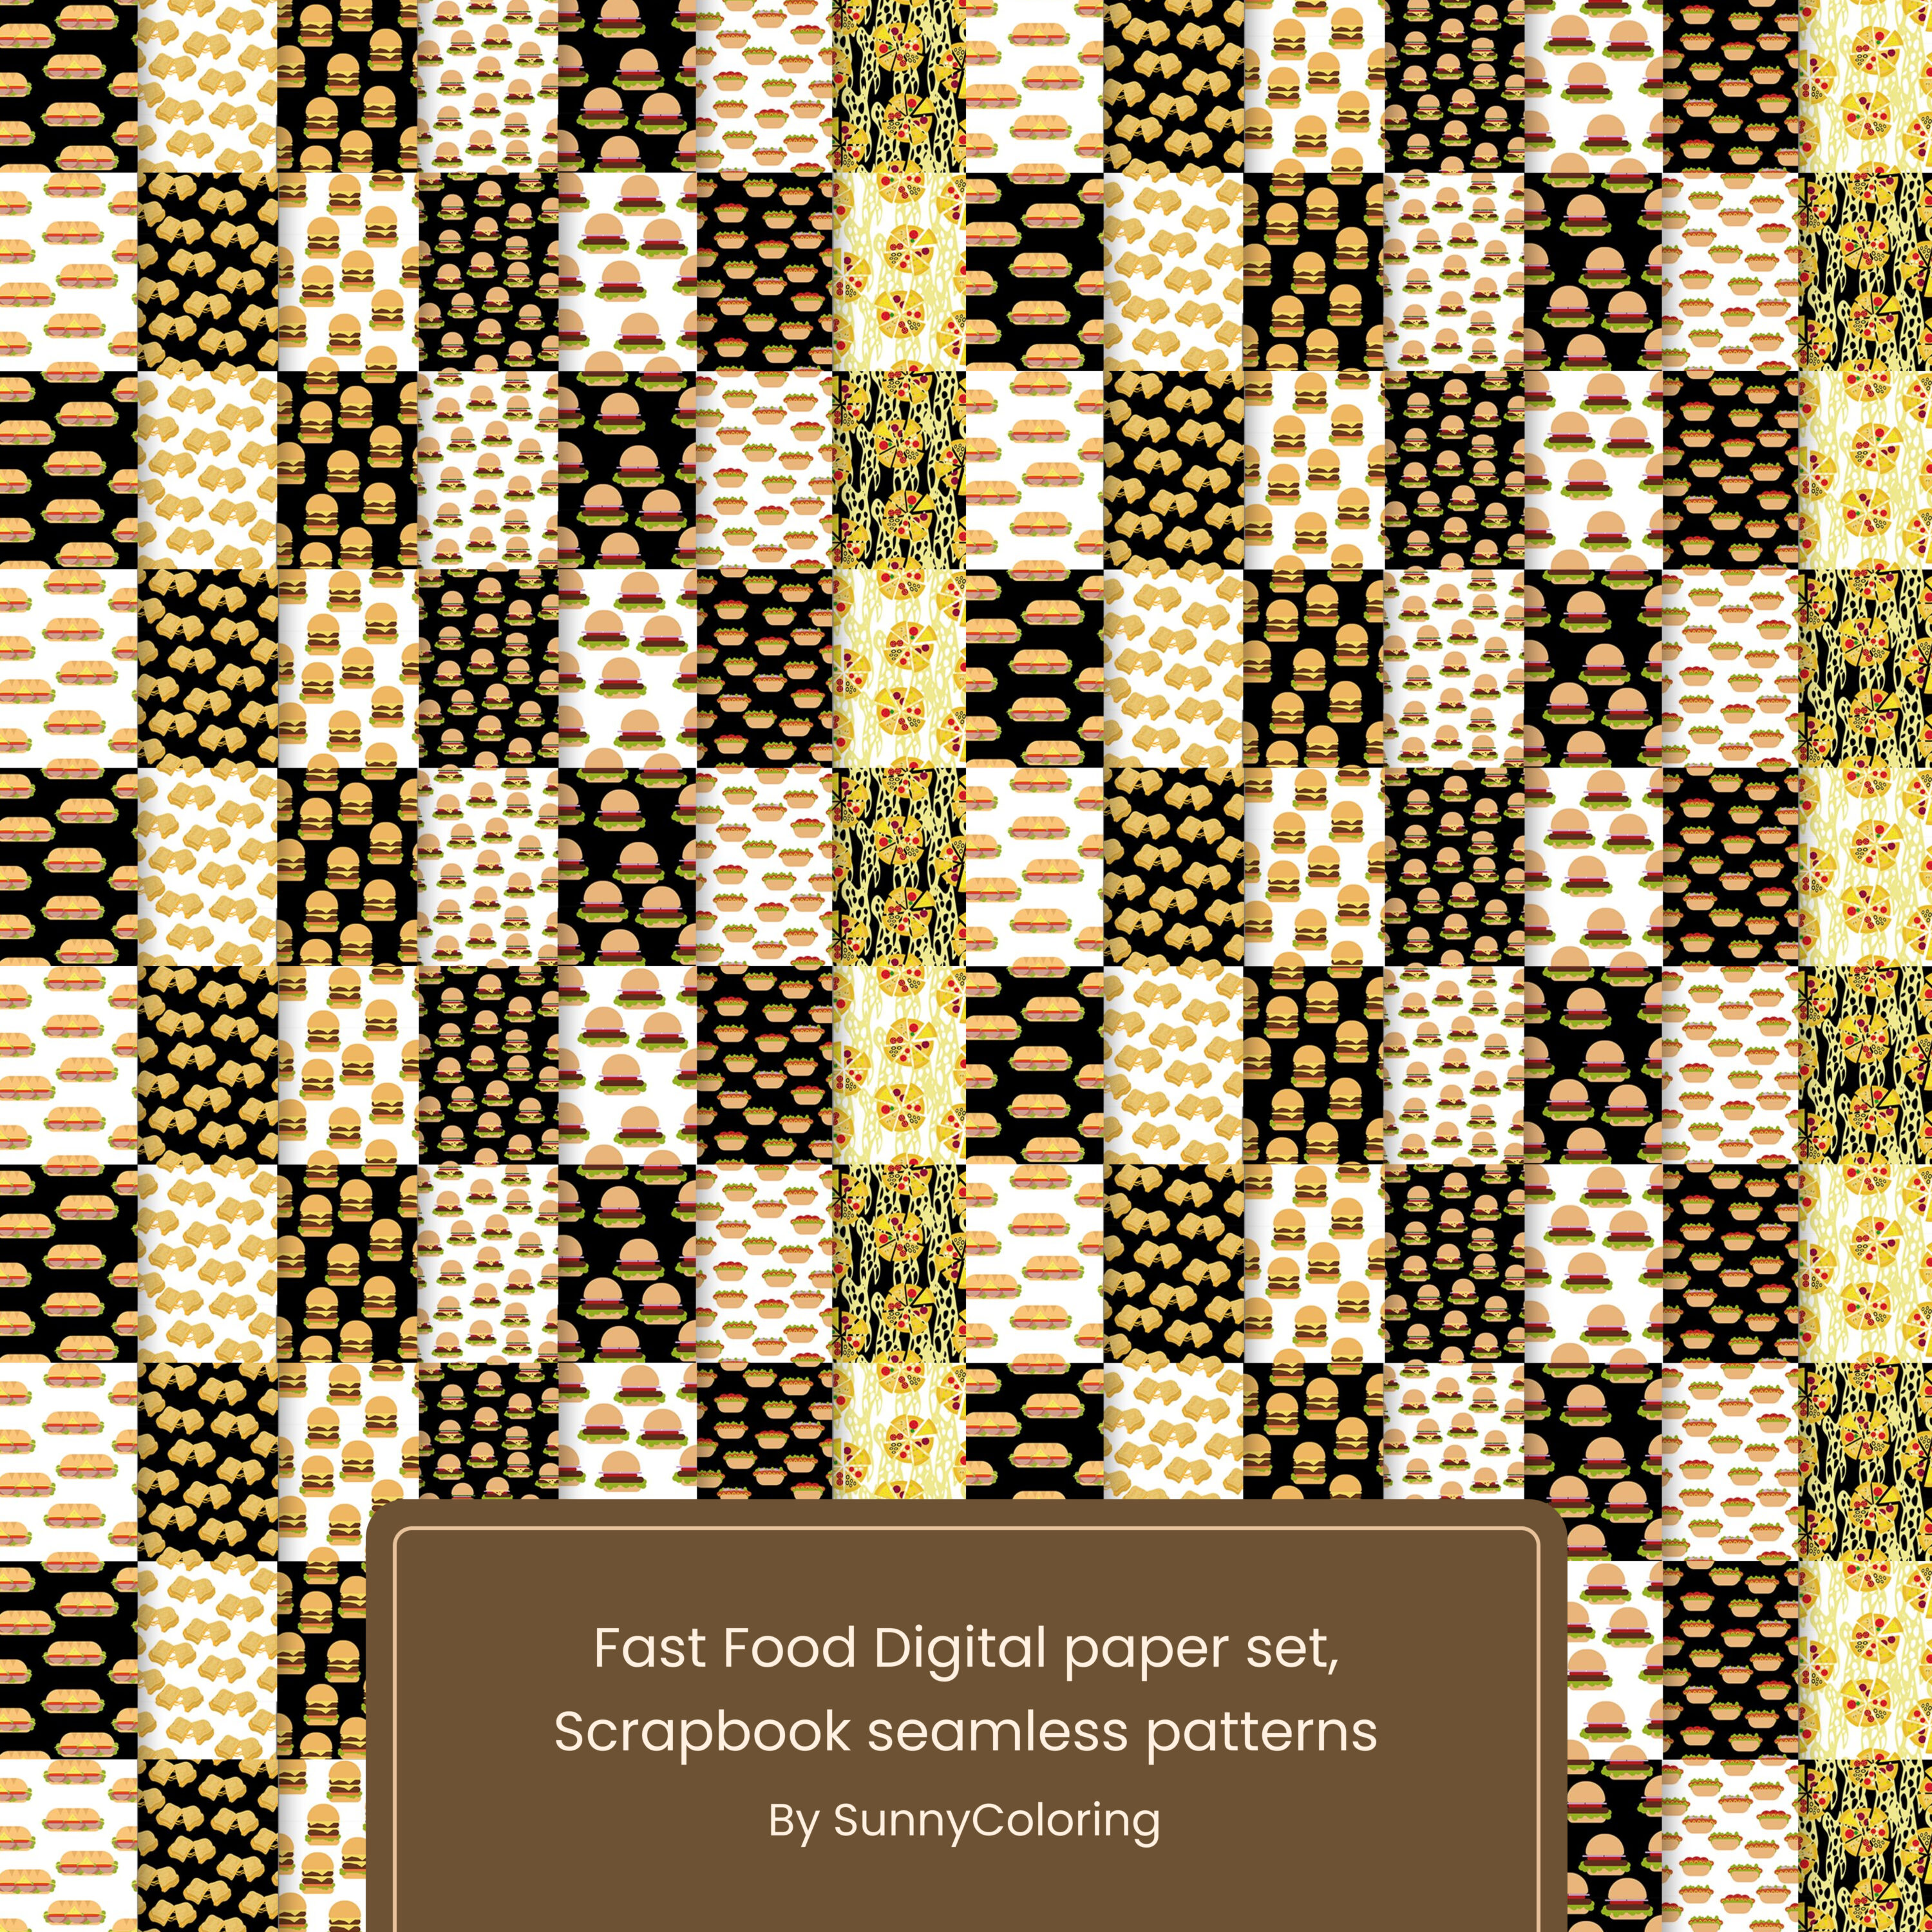 Prints of fast food digital paper set scrapbook seamless patterns.